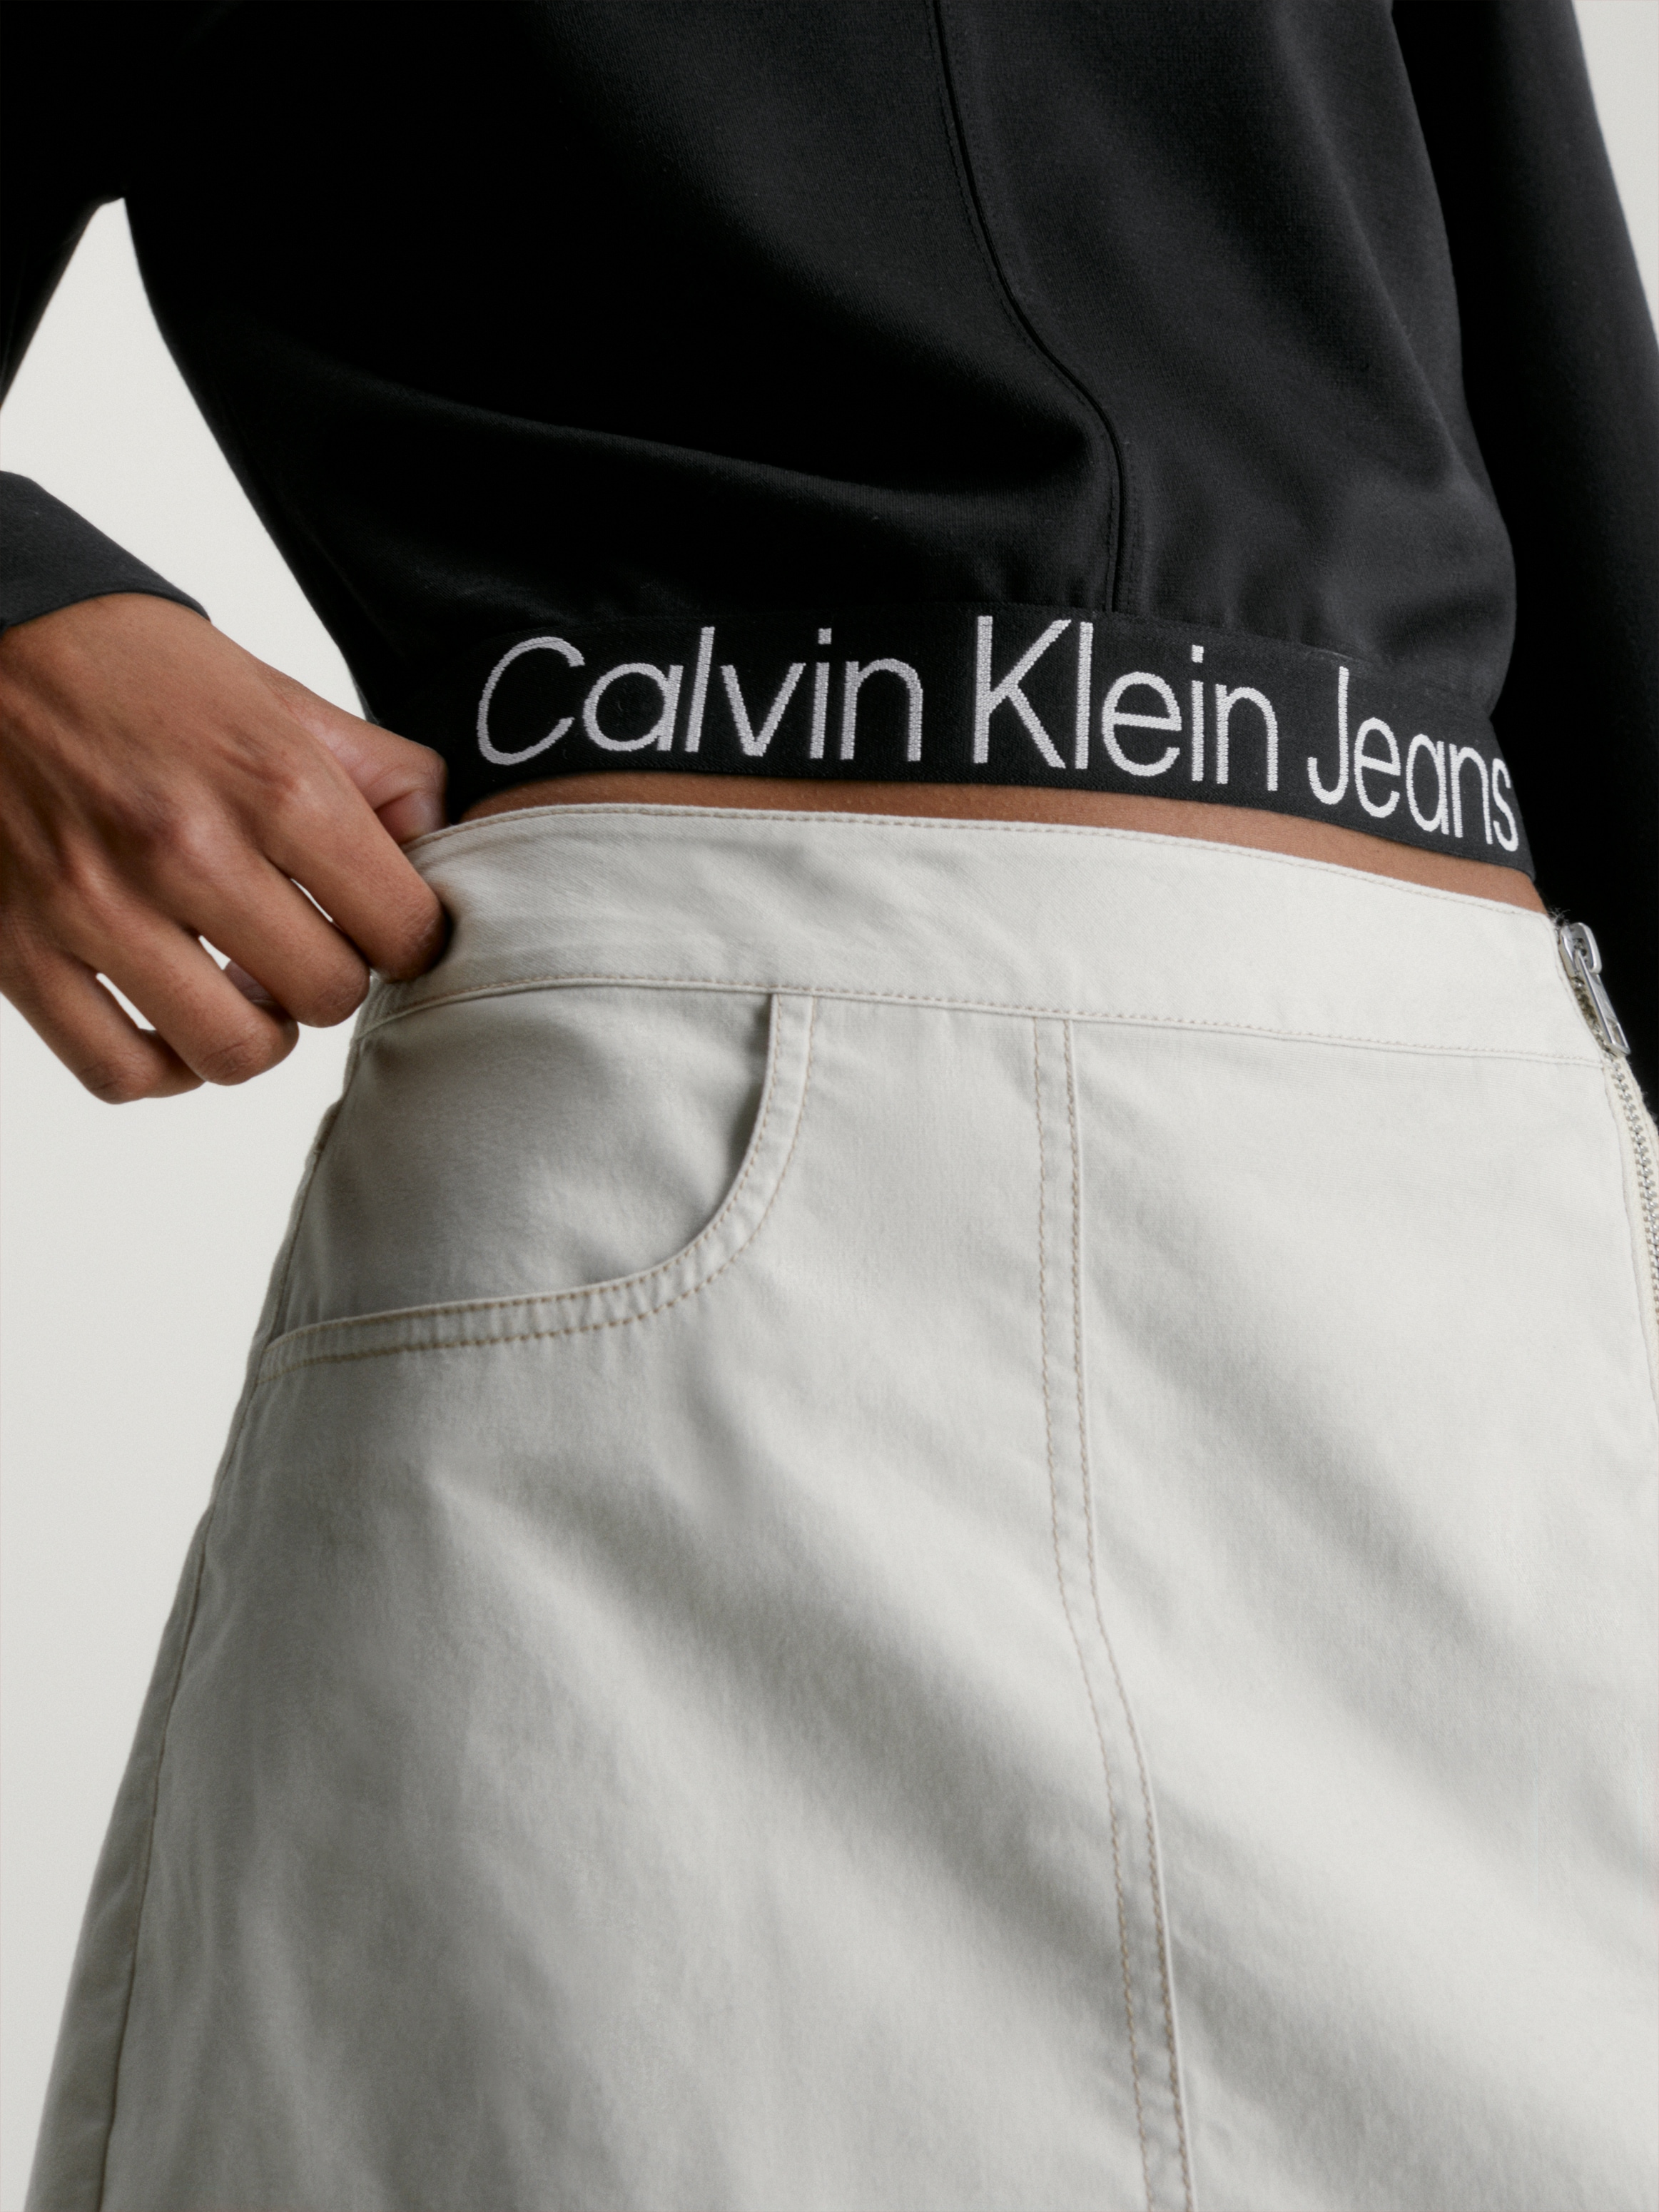 Calvin Klein Jeans Kapuzenshirt »TAPE MILANO HOODIE«, mit Logoschriftzug